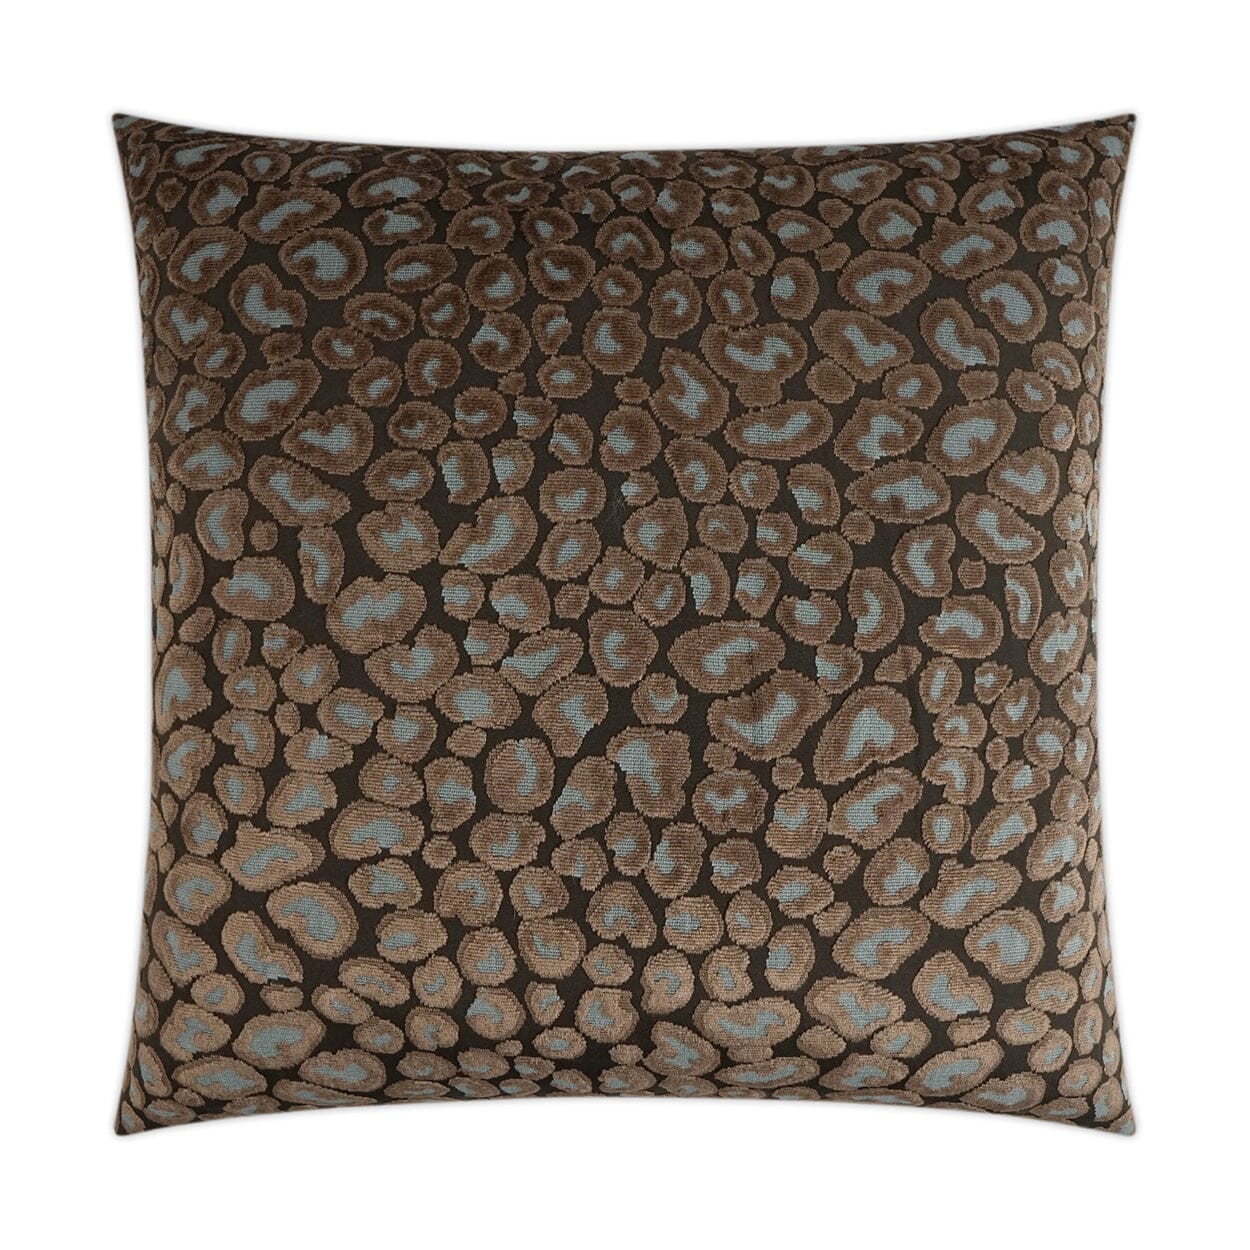 D.V. Kap Cheetah Decorative Throw Pillow | Moonshadow Pillows D.V Kap Home